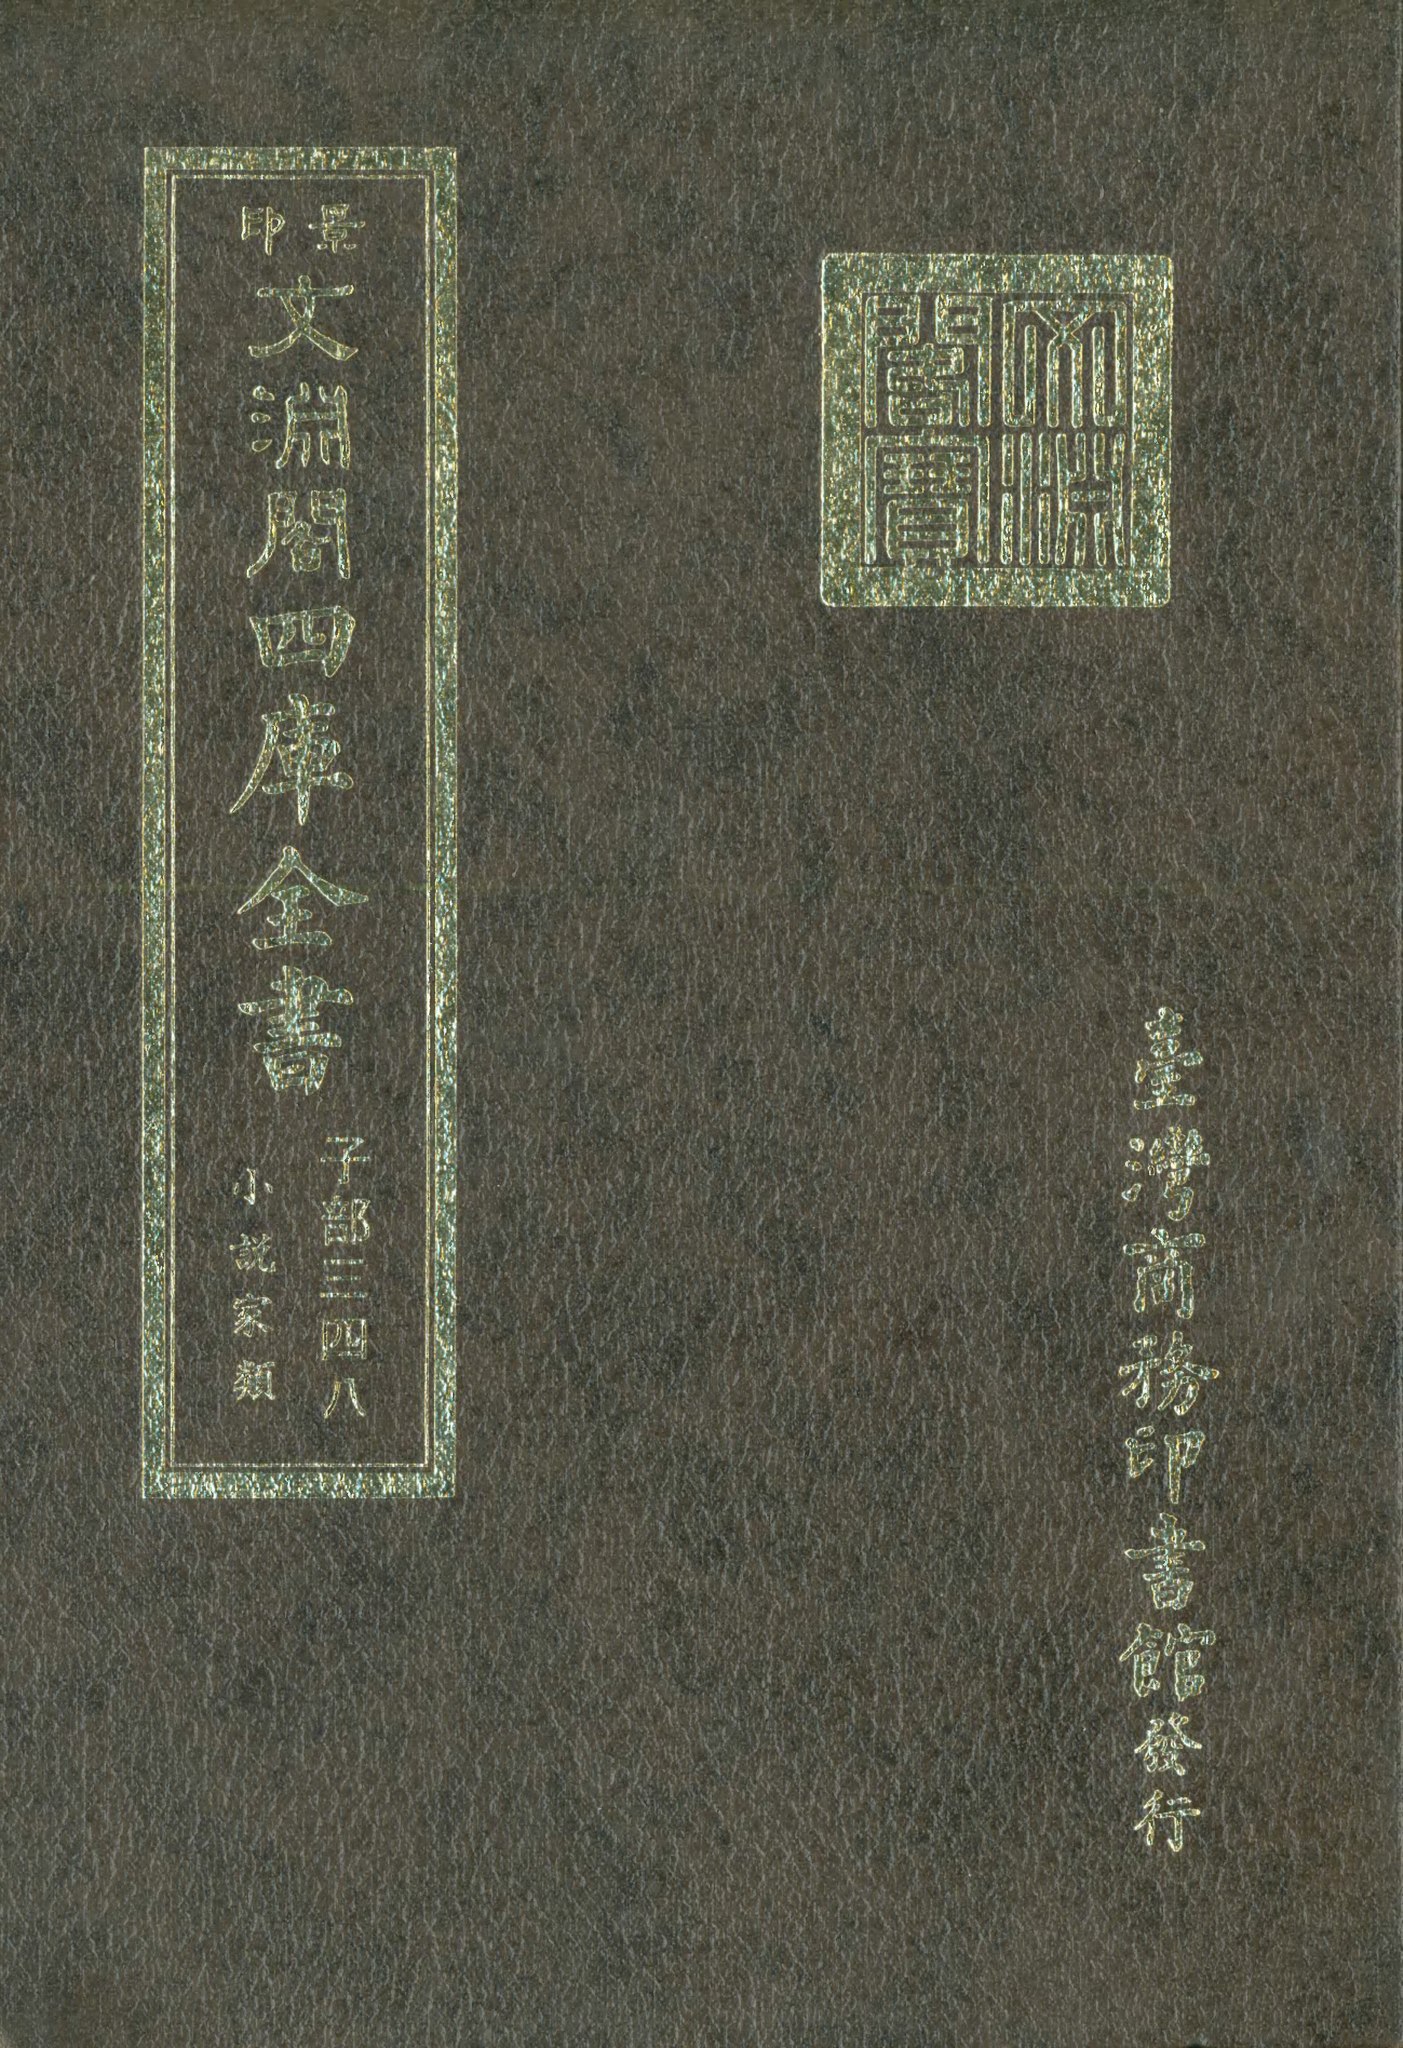 File:文淵閣四庫全書1042冊.djvu - Wikimedia Commons